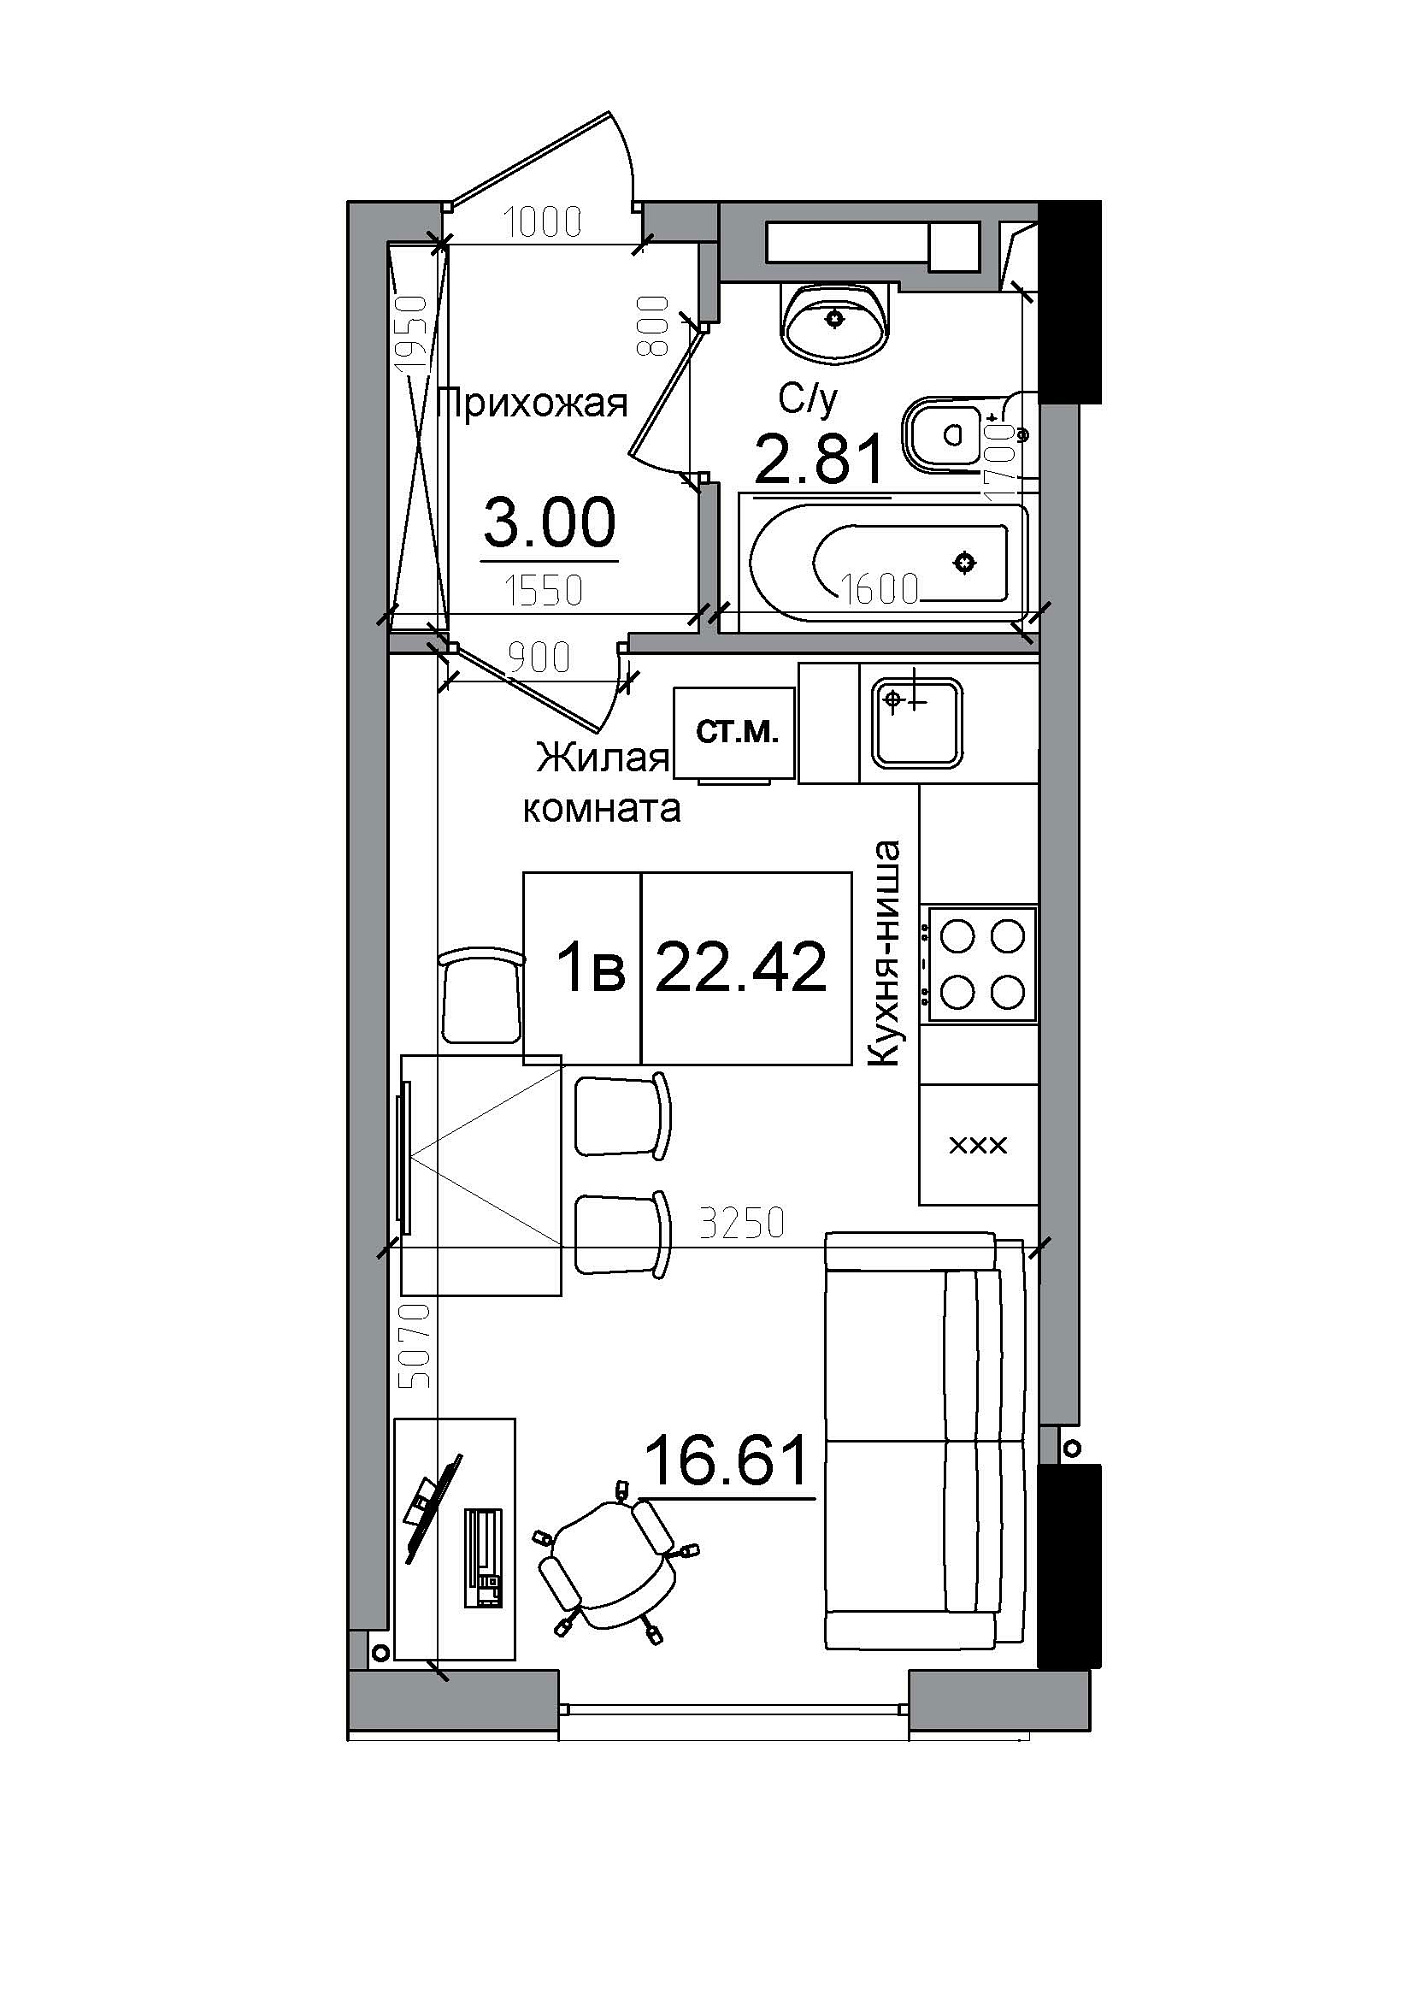 Planning Smart flats area 22.42m2, AB-12-06/00003.